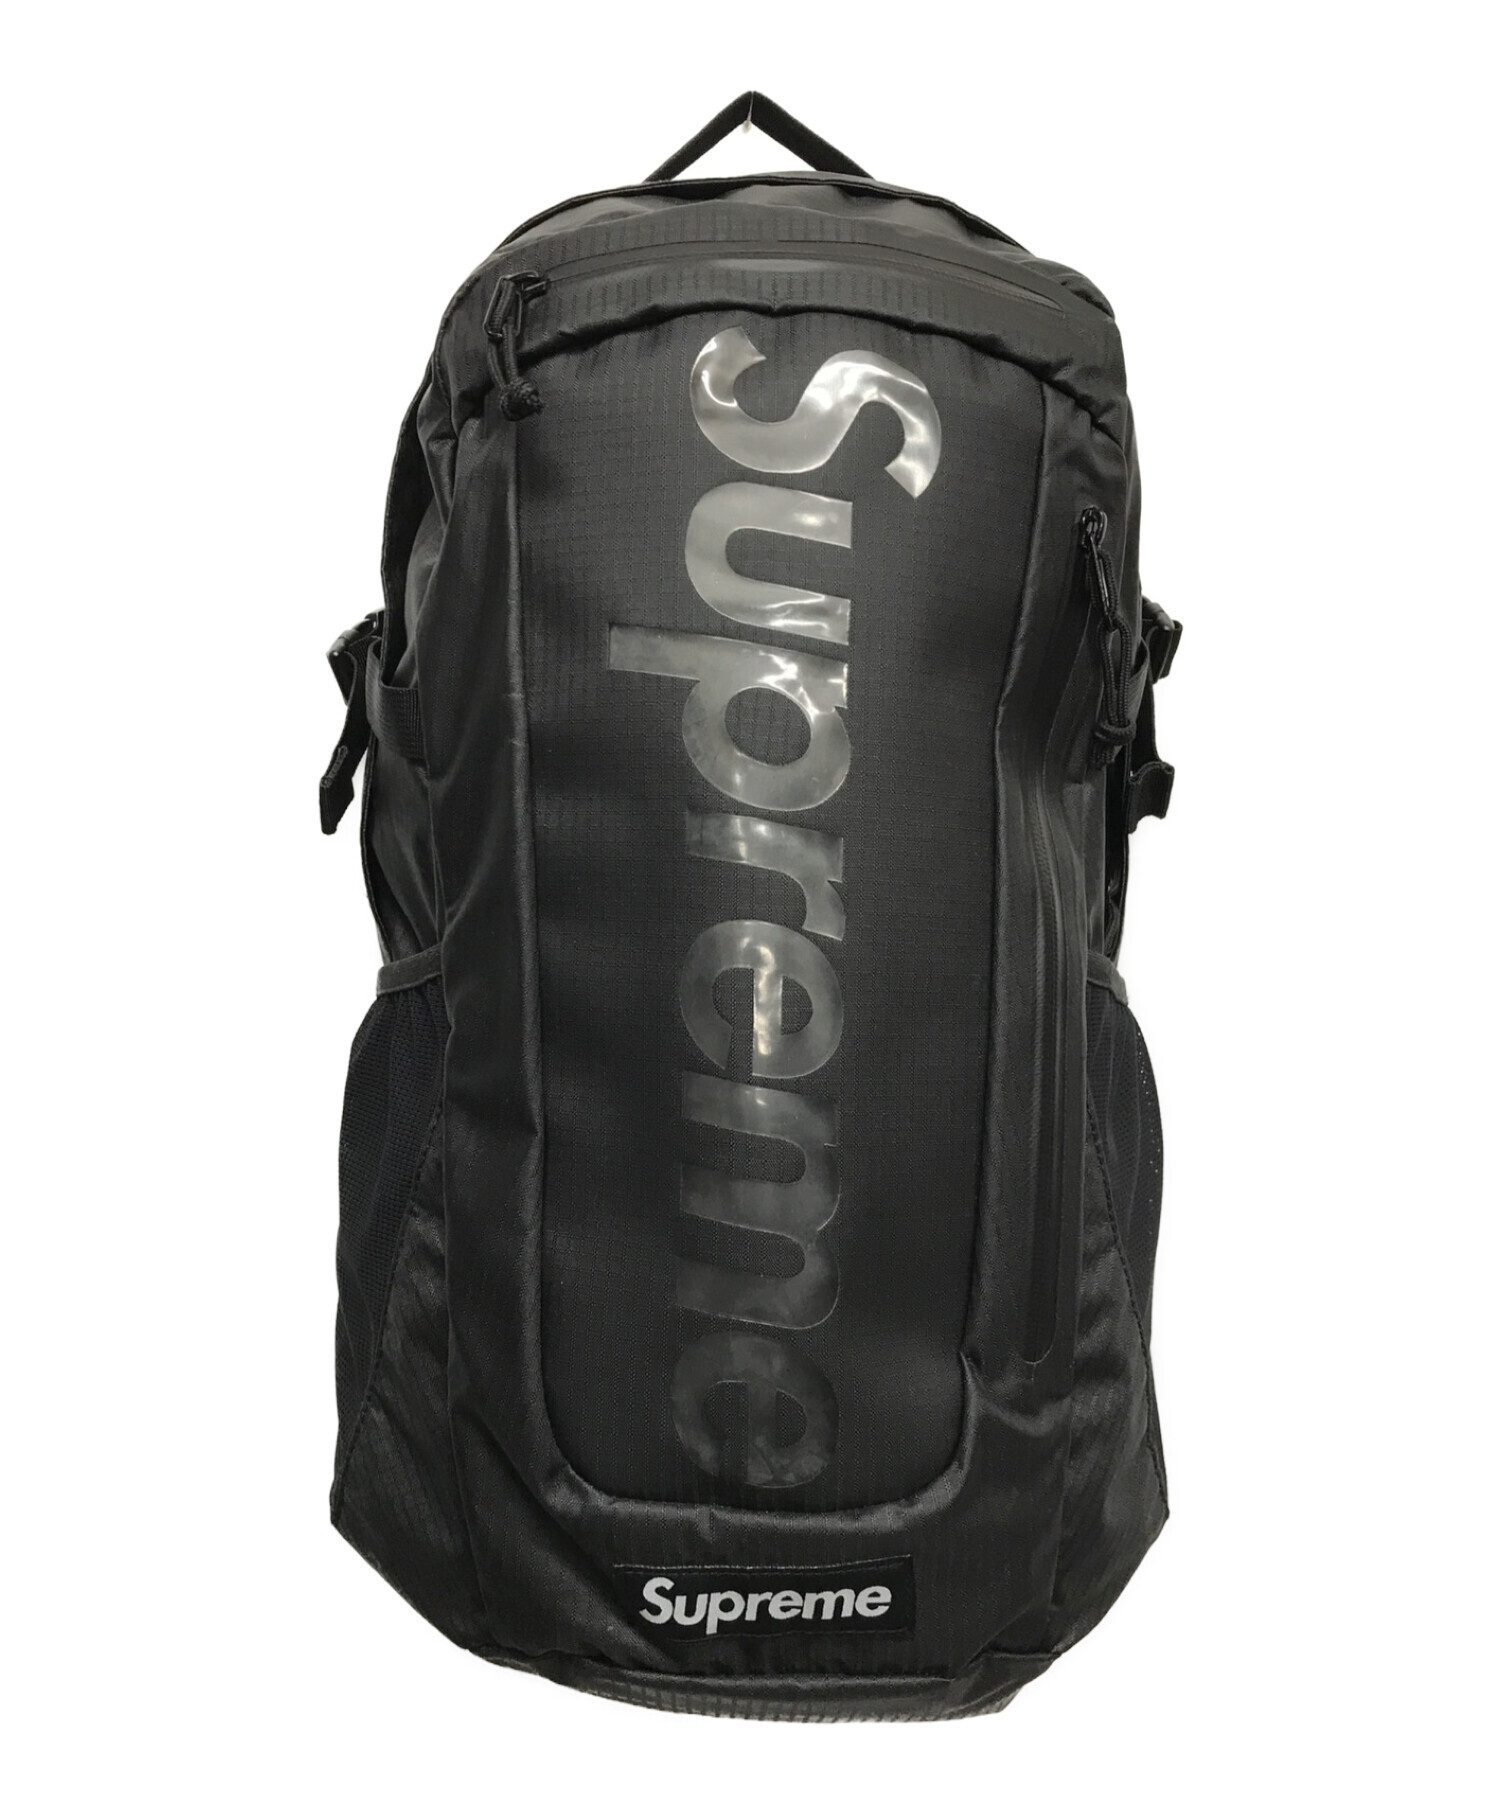 Supreme (シュプリーム) バックパック / Backpack ブラック